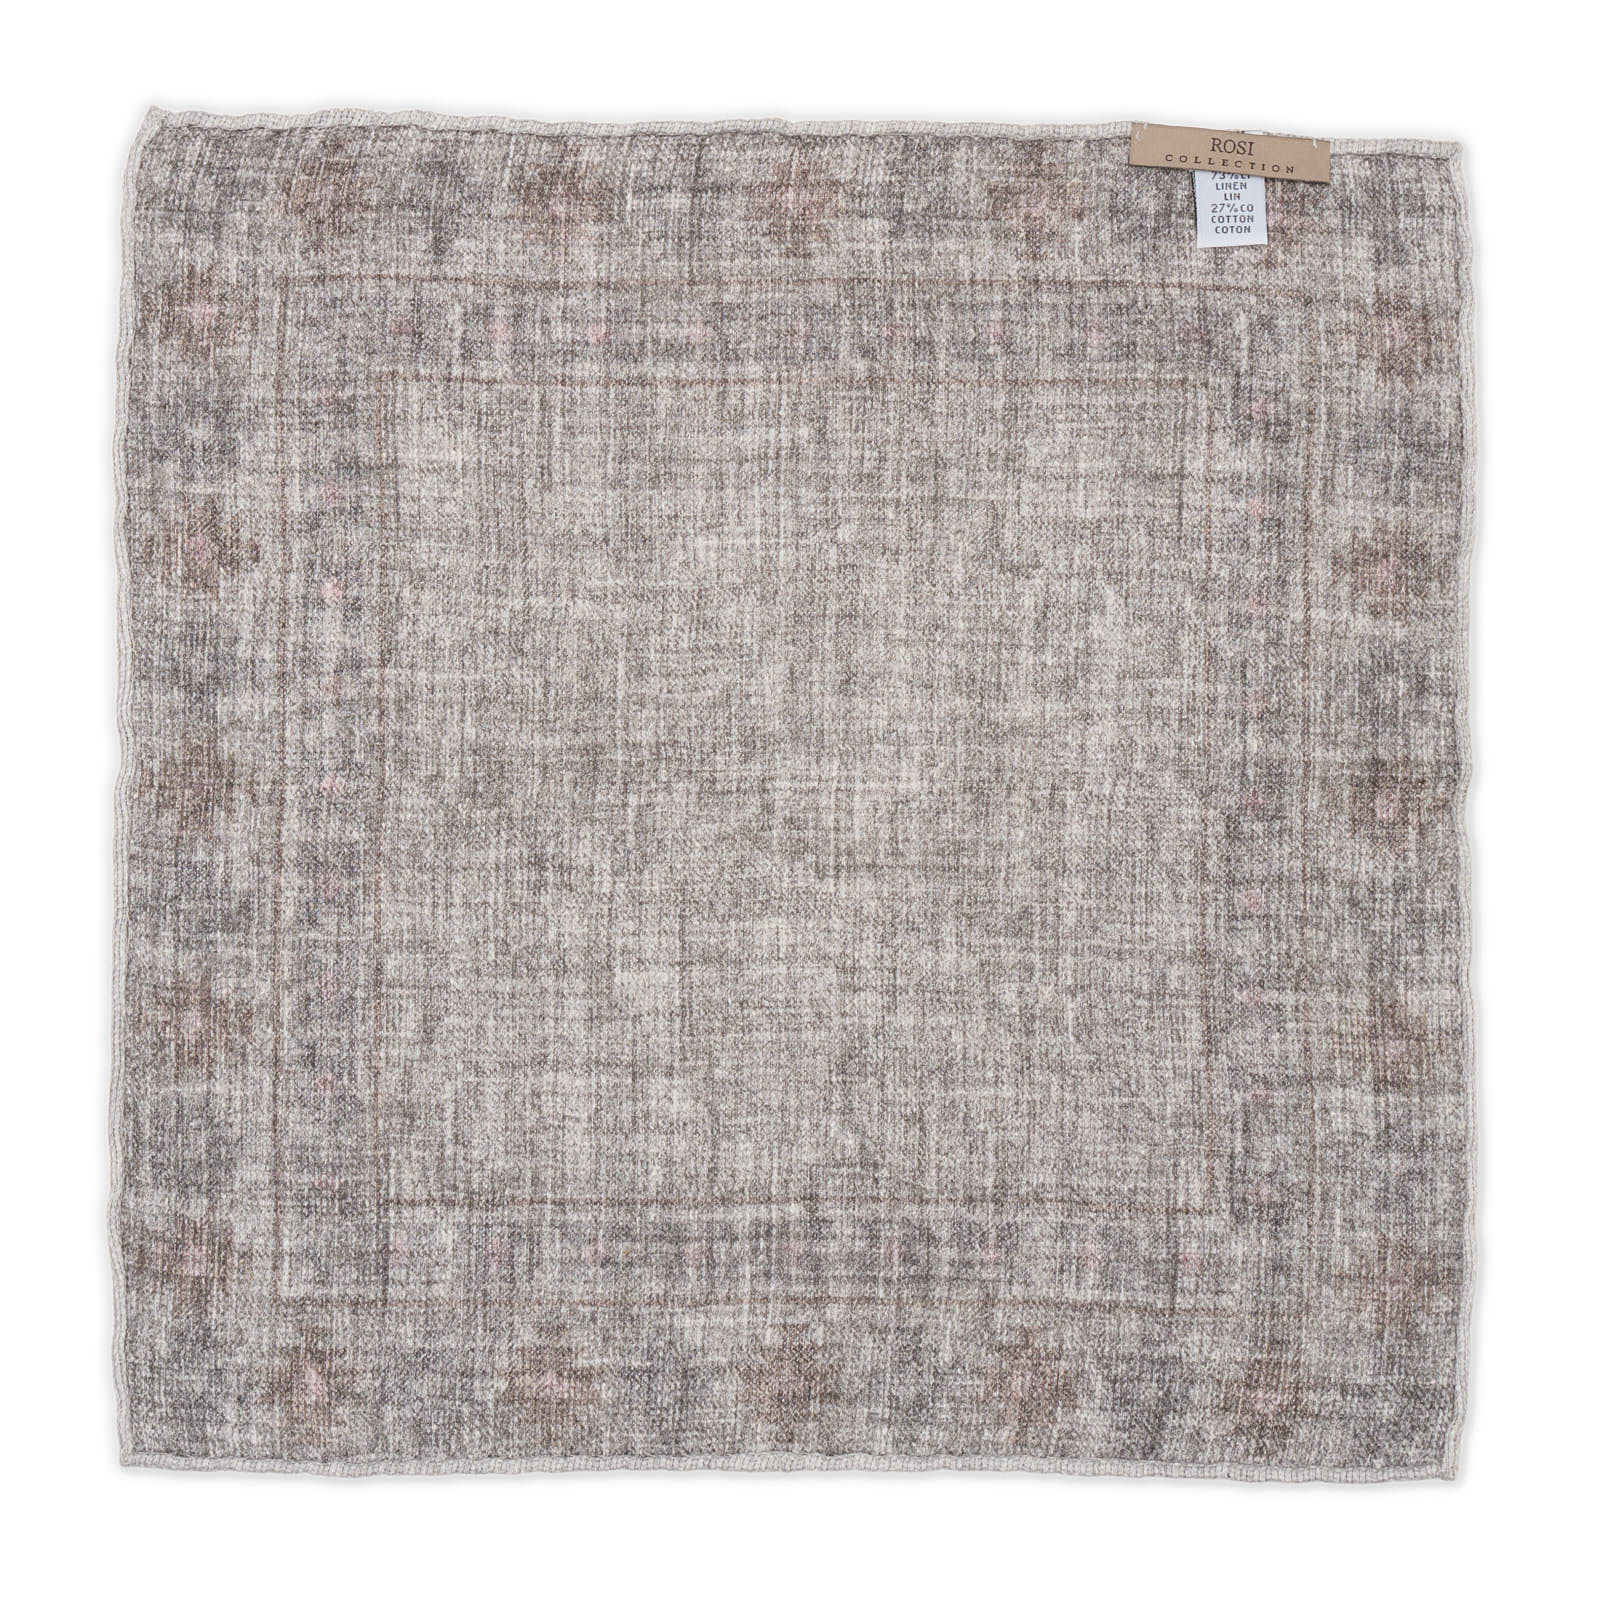 ROSI Handmade Gray-Brown Geometric-Plaster Linen-Cotton Pocket Square Double Sided